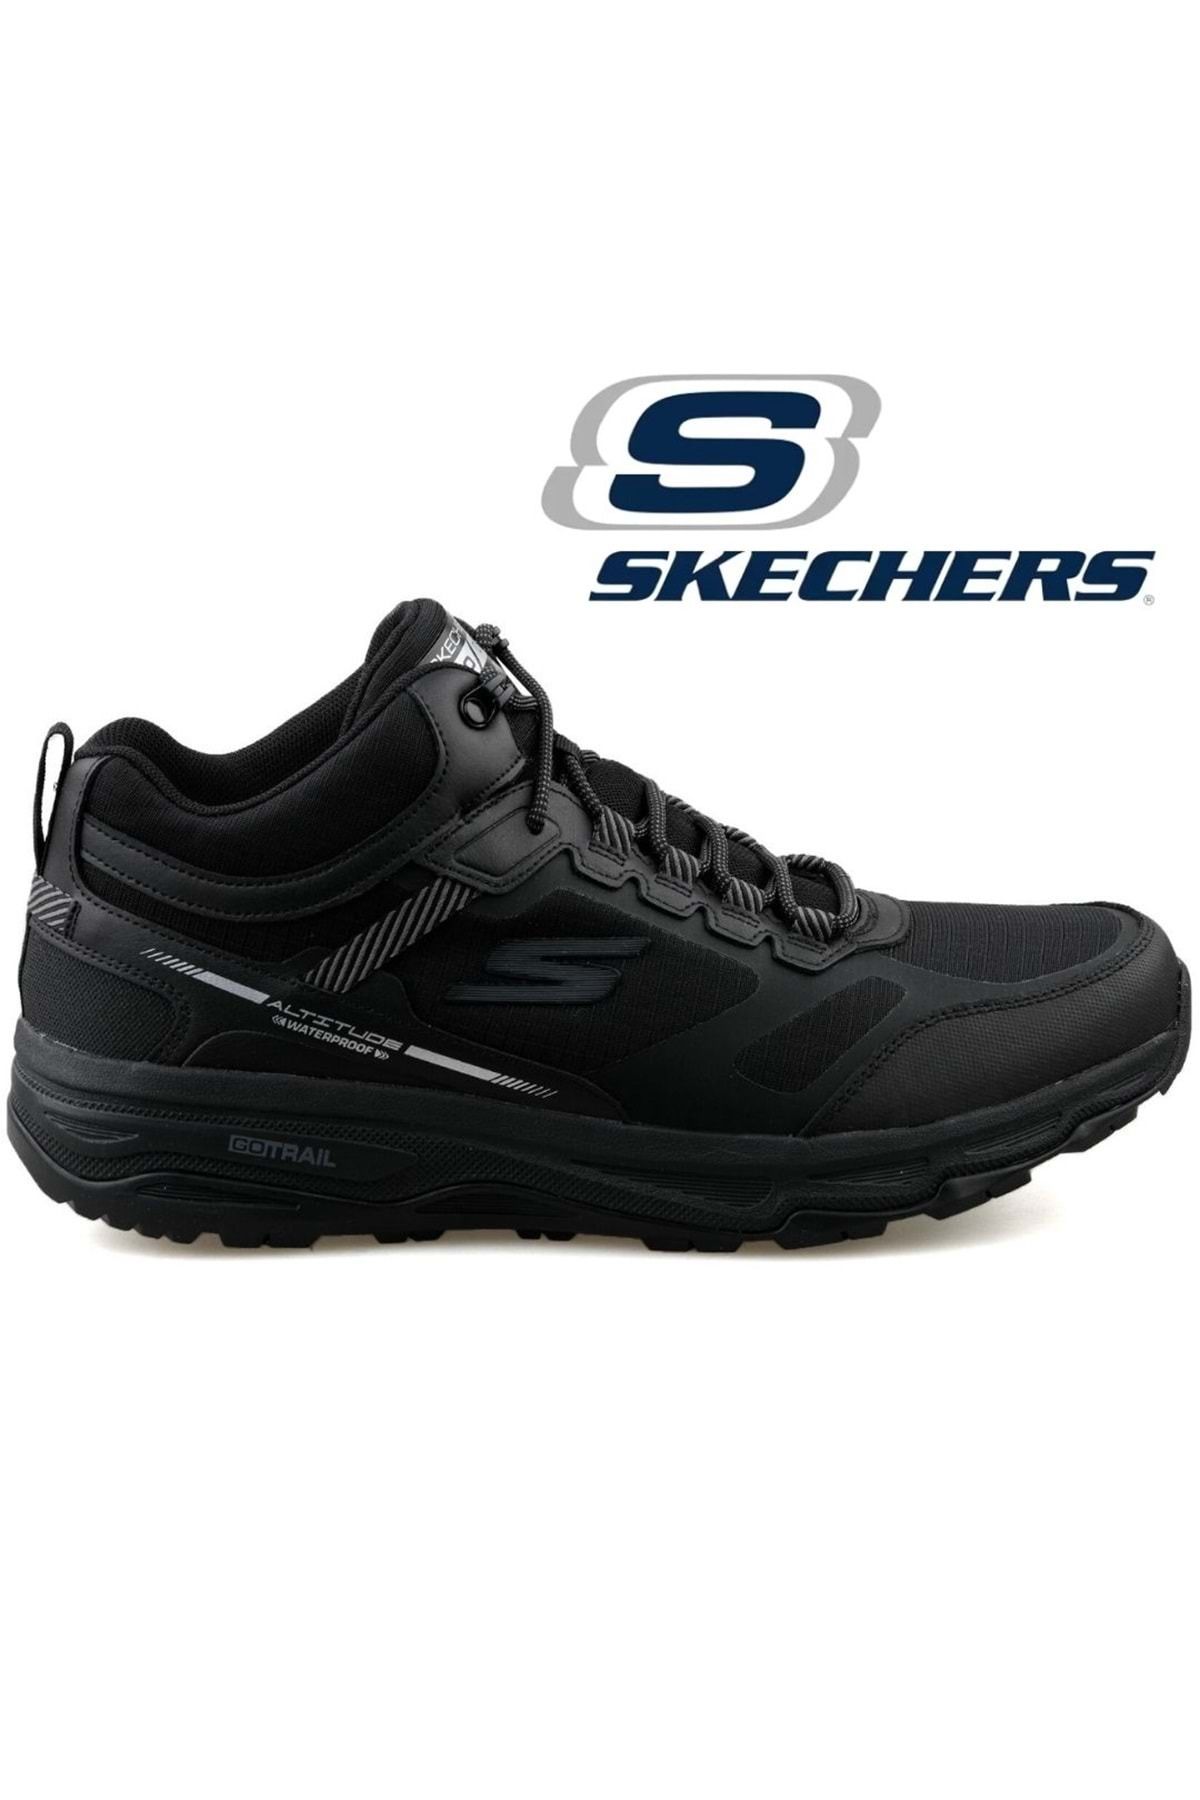 Skechers Go Run Trail Altitude-waterproof 220573 Erkek Bot Siyah